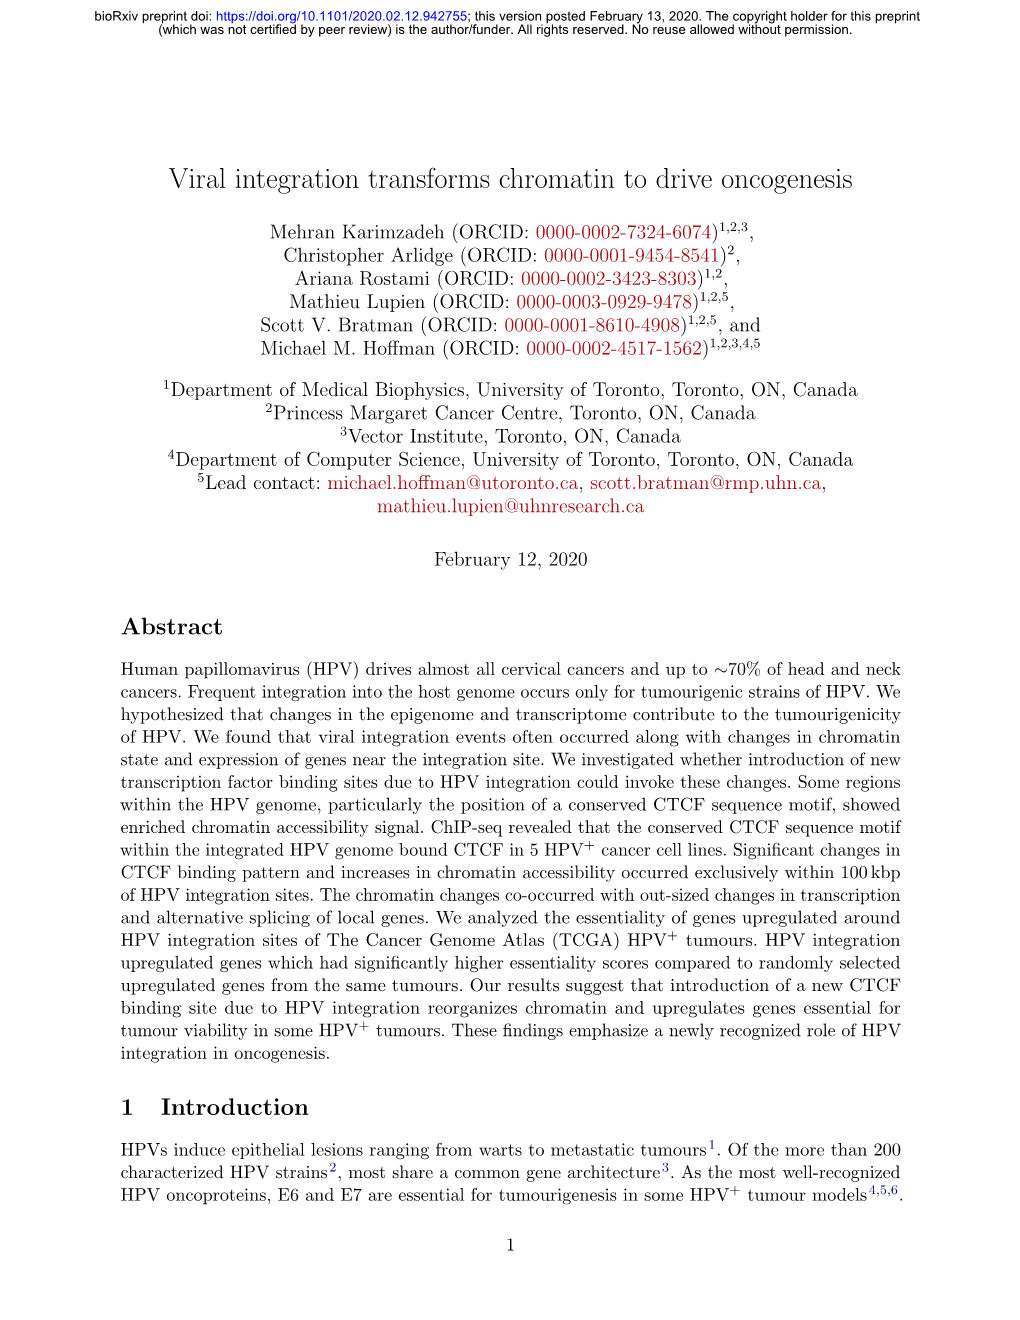 Viral Integration Transforms Chromatin to Drive Oncogenesis